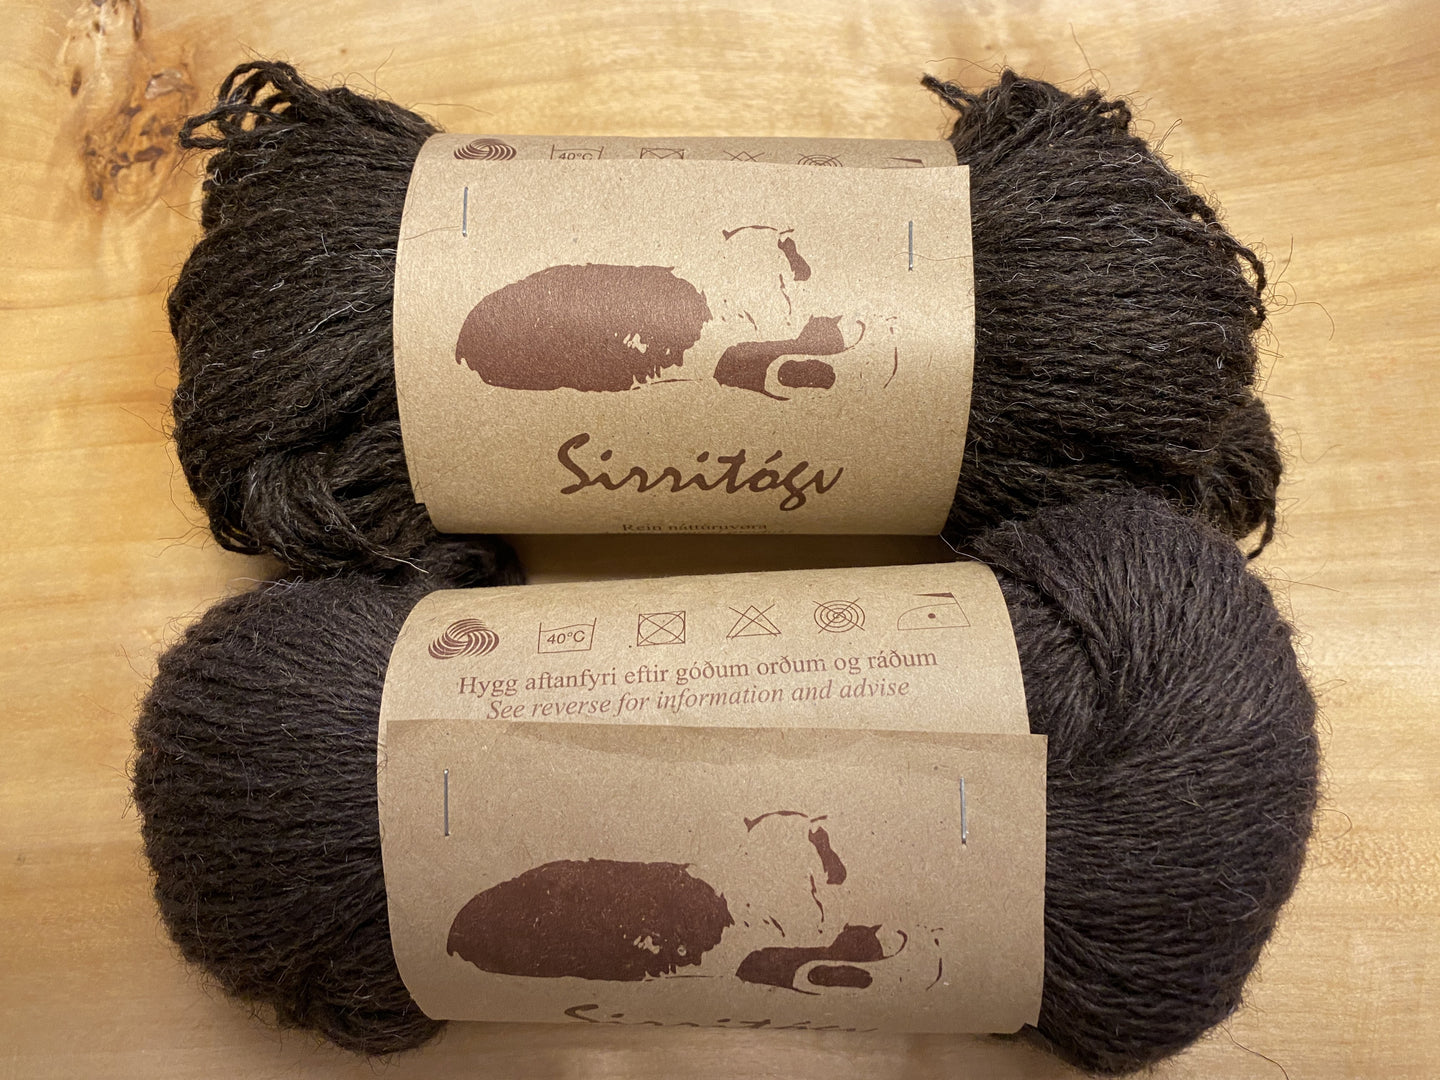 Uldgarn 2-trådet i færøsk uld fra Sirri, naturlig mørkebrun